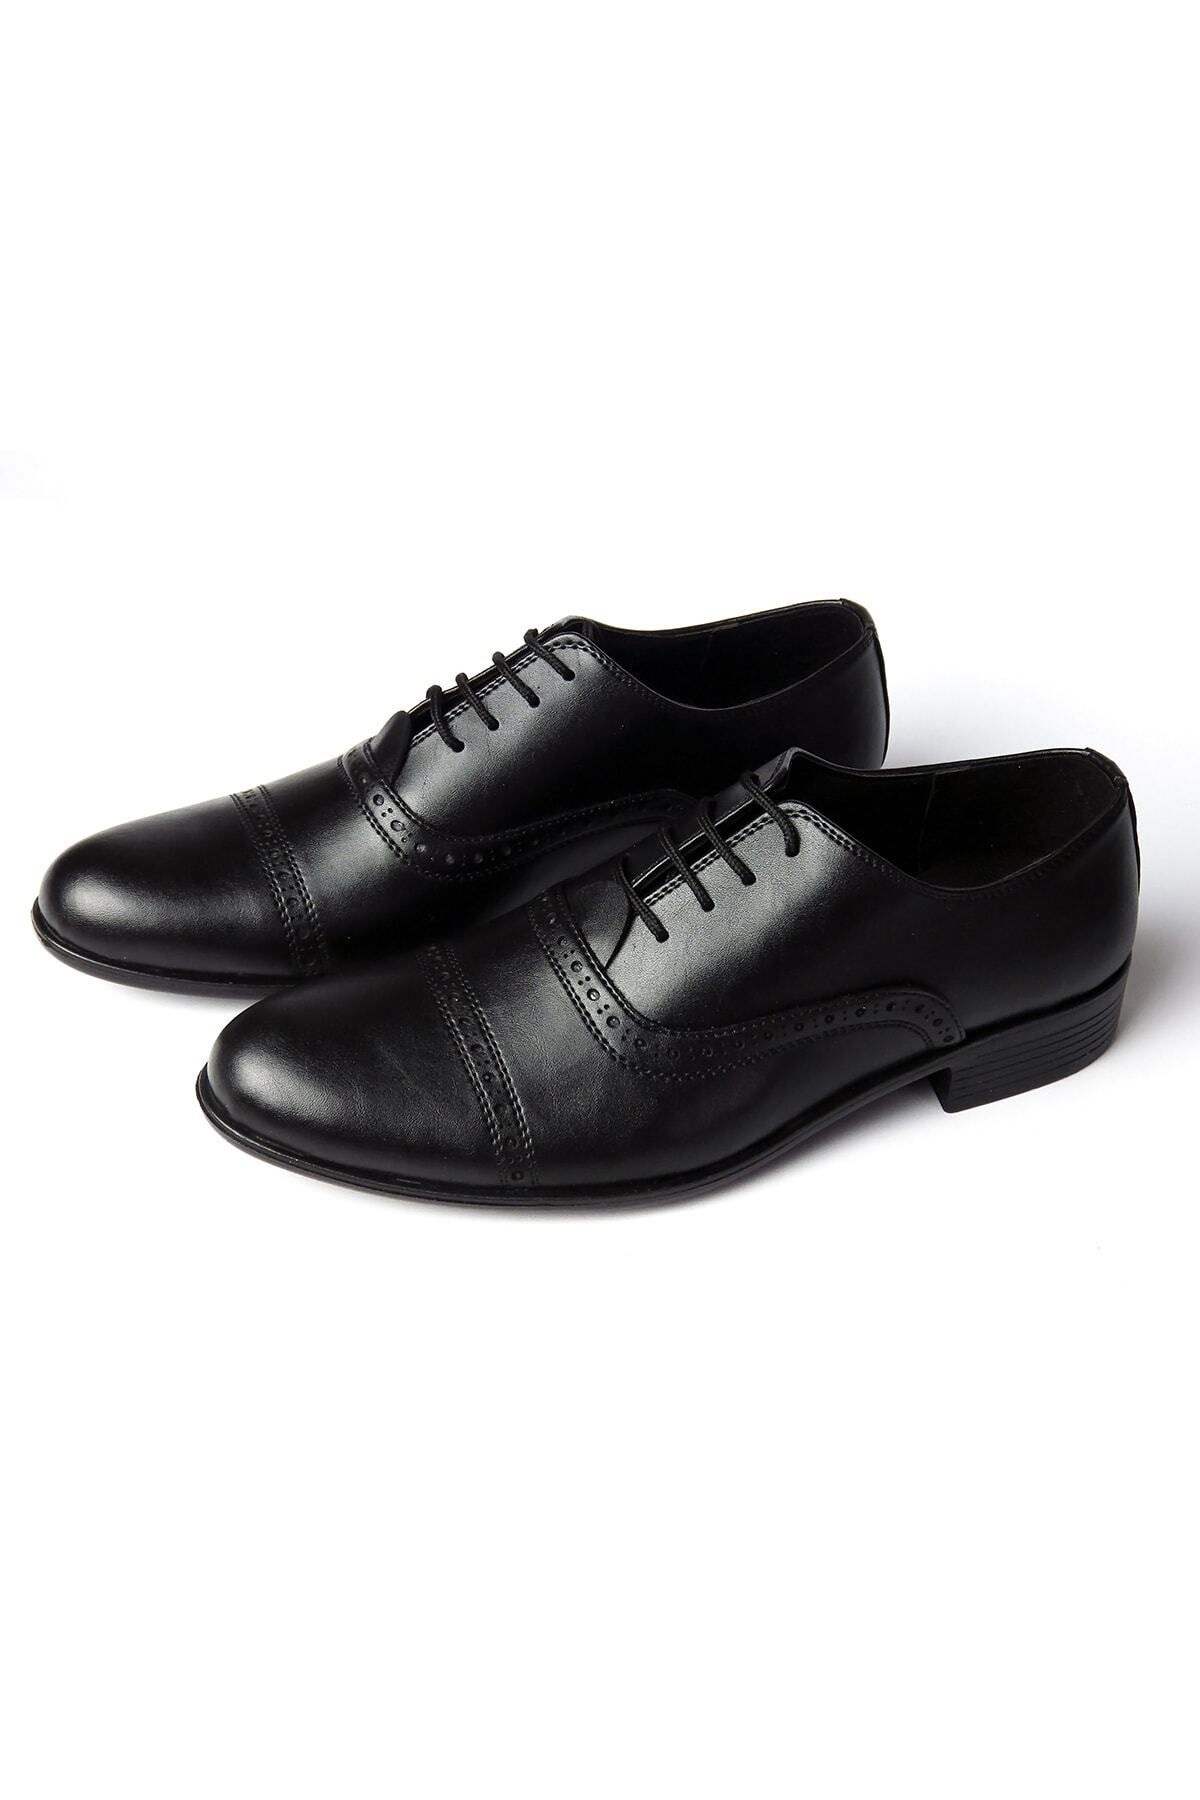 Gencol Klasik Siyah Erkek Ayakkabı Gencol 306